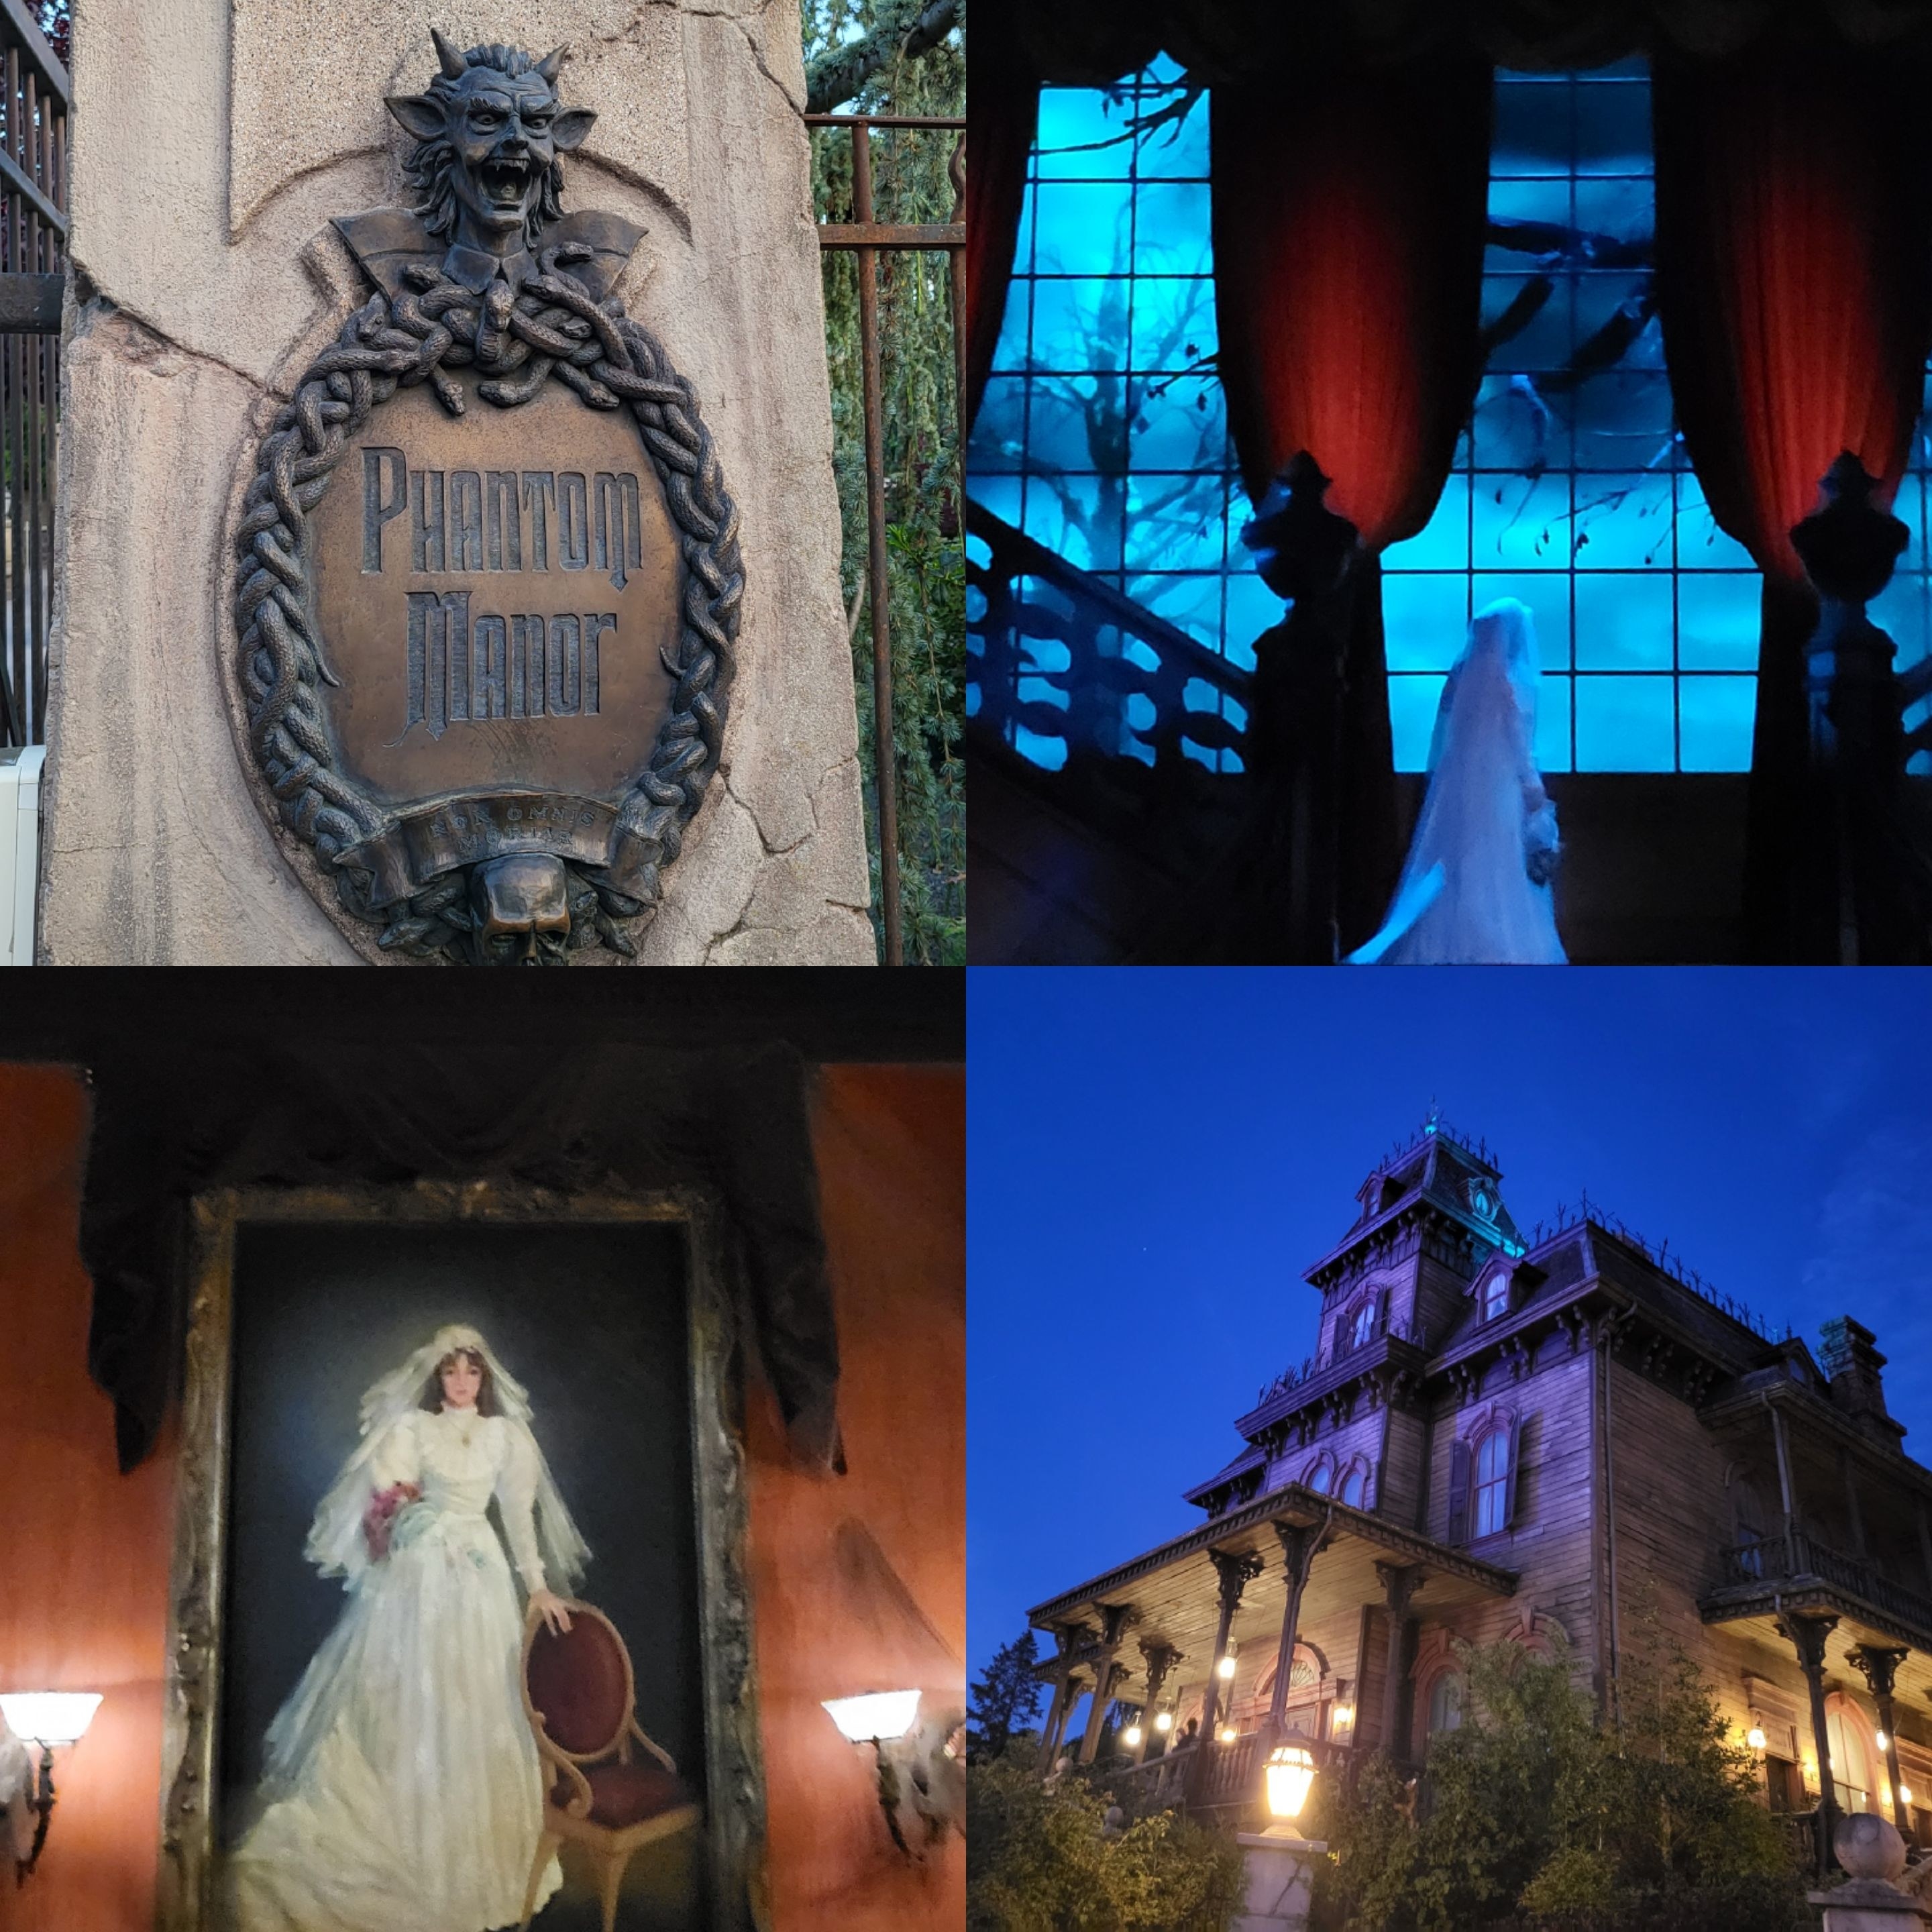 Various pictures on/around "Phantom Manor"